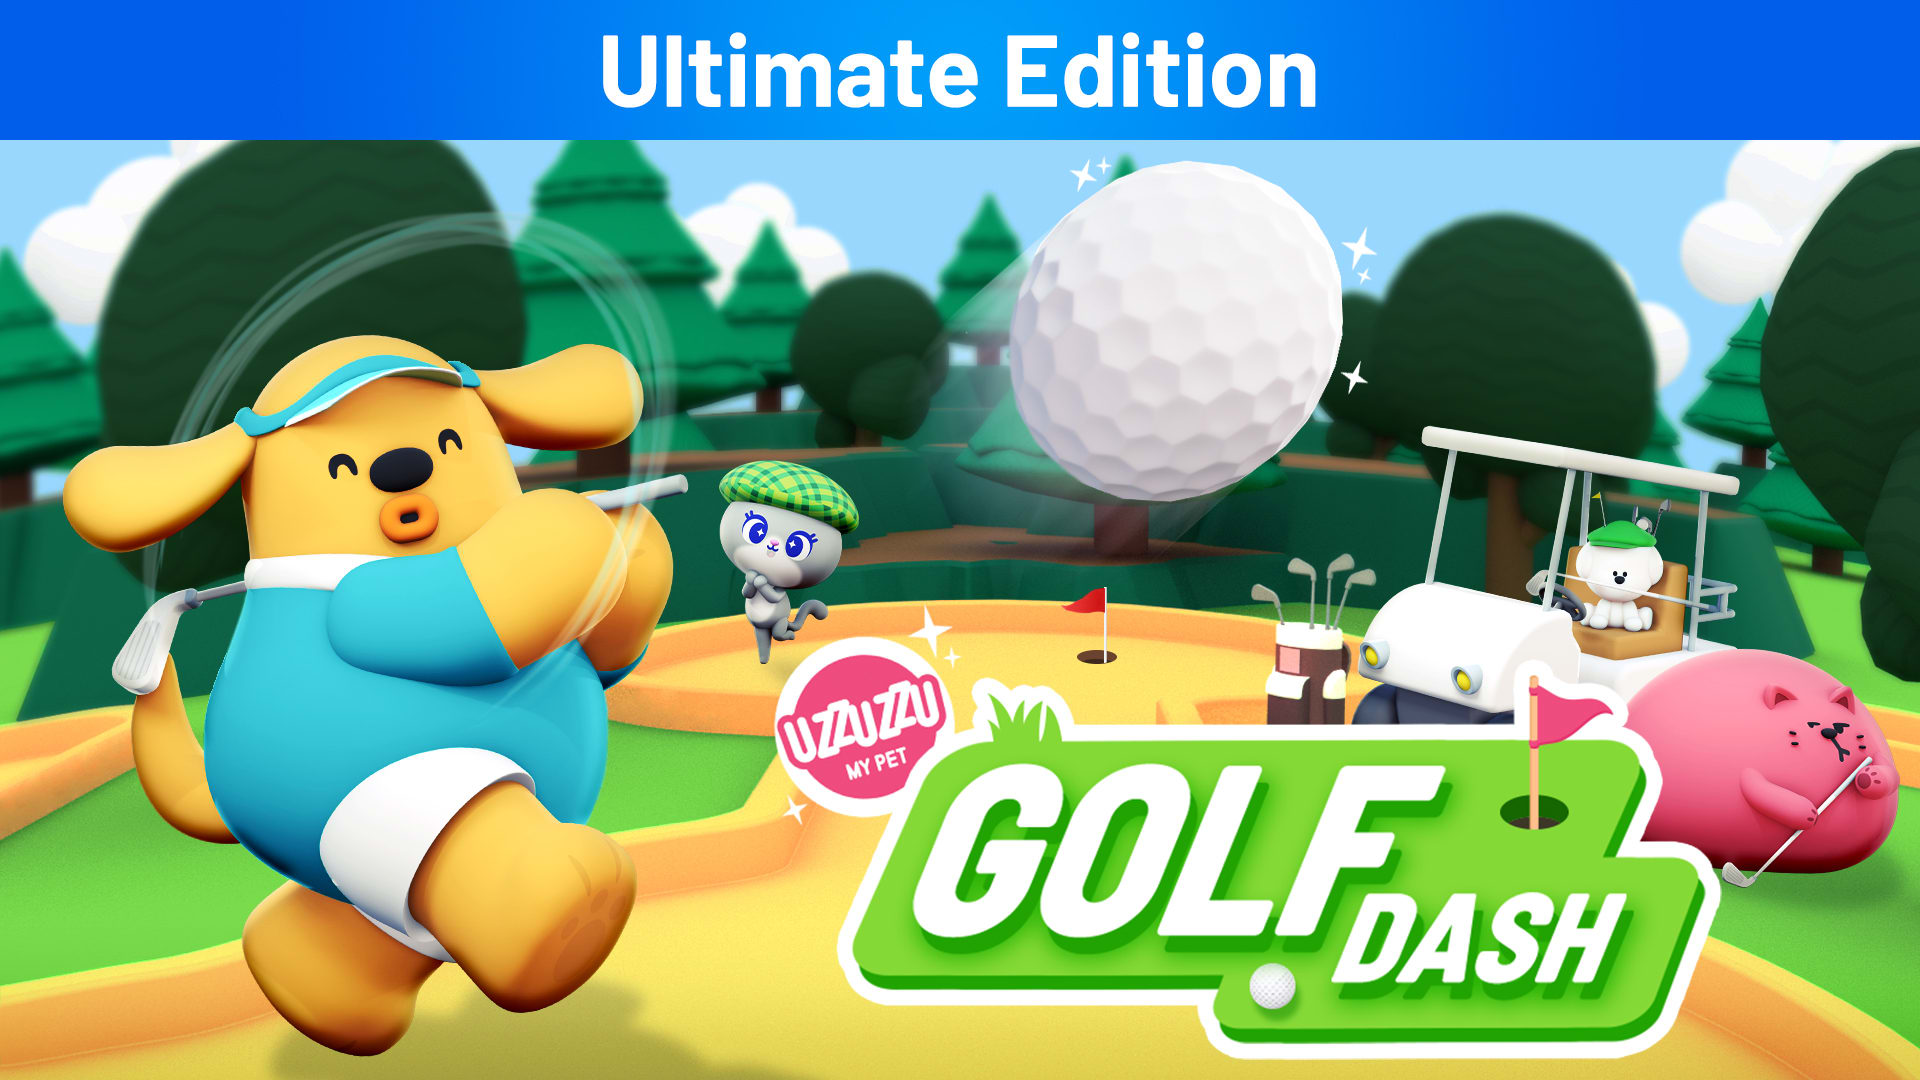 Uzzuzzu My Pet - Golf Dash Ultimate Edition 1